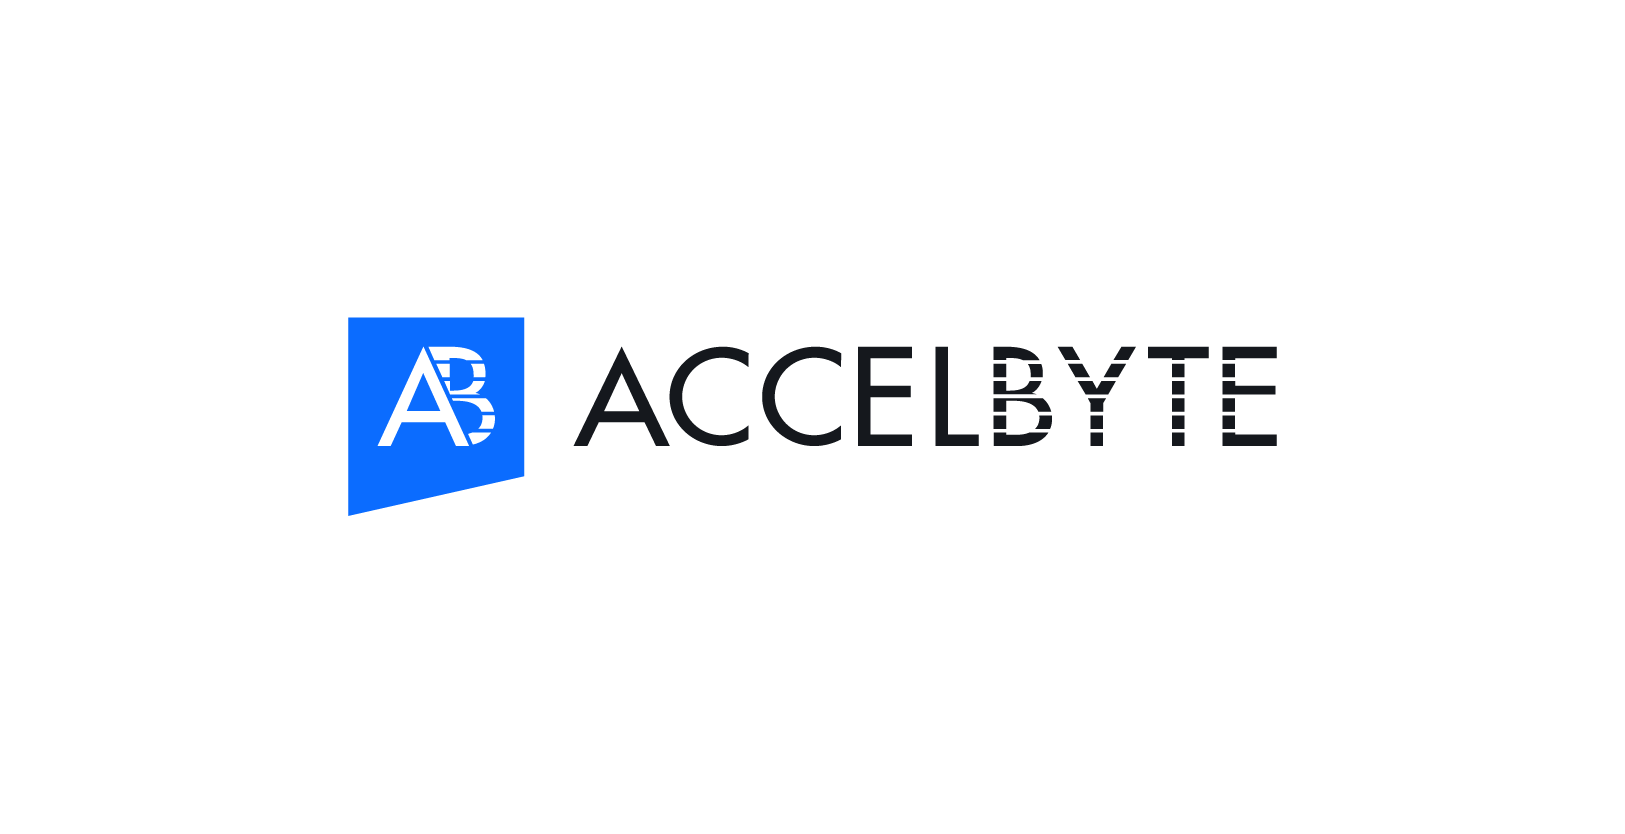 VisionFund Portfolio Company AccelByte's logo